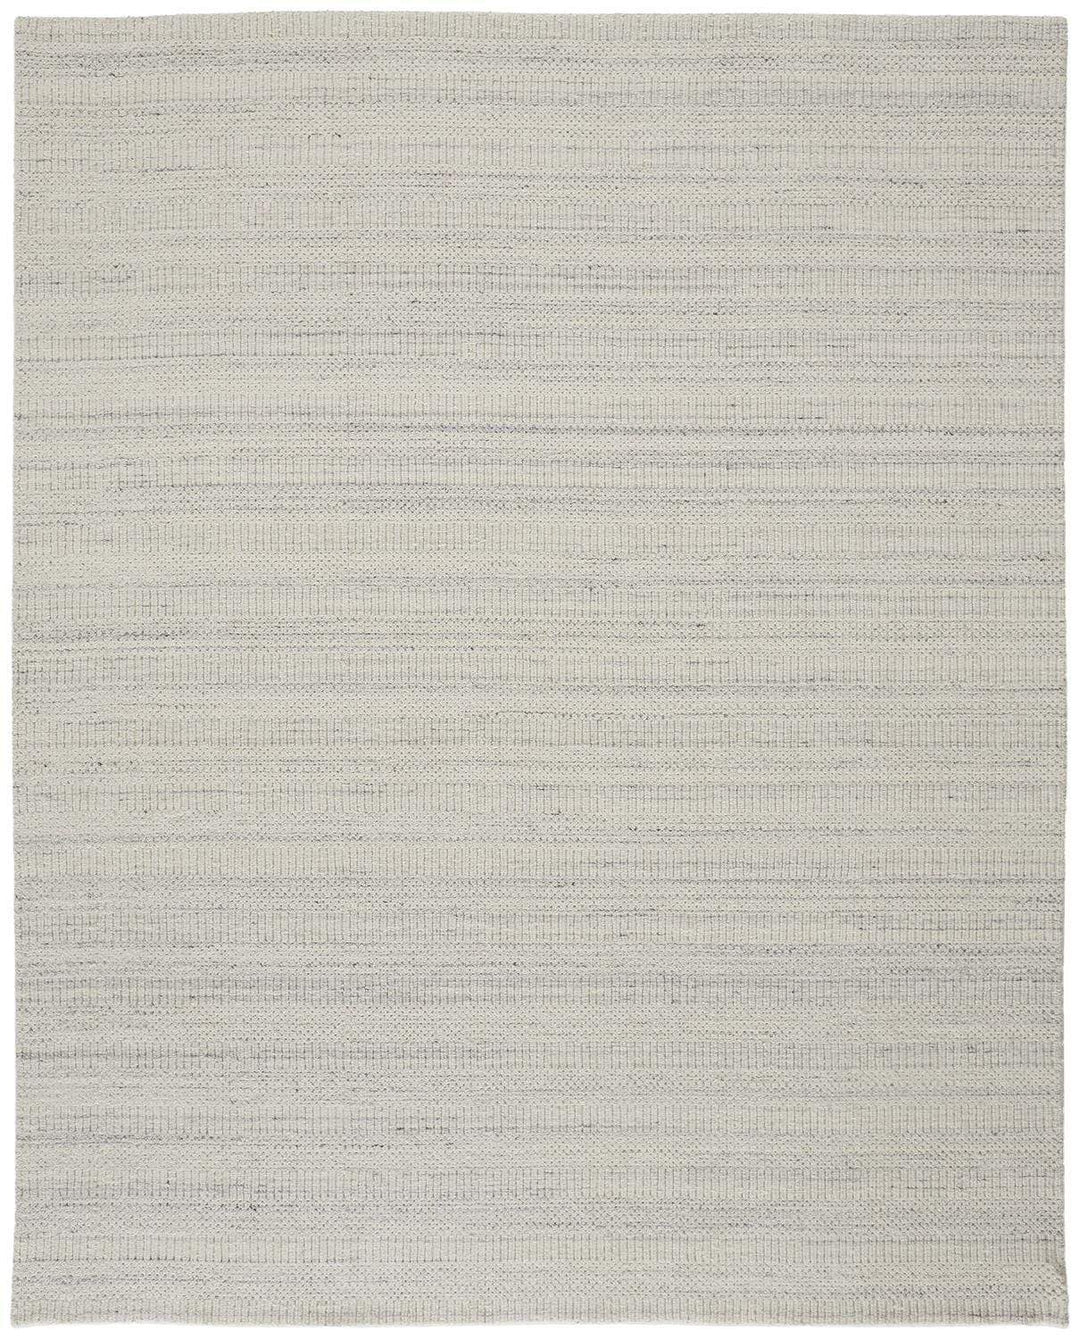 Feizy Feizy Keaton Handmade Wool Neutral Stripe Rug - Light Gray - Available in 6 Sizes 4' x 6' KTN8018FIVYGRYC00